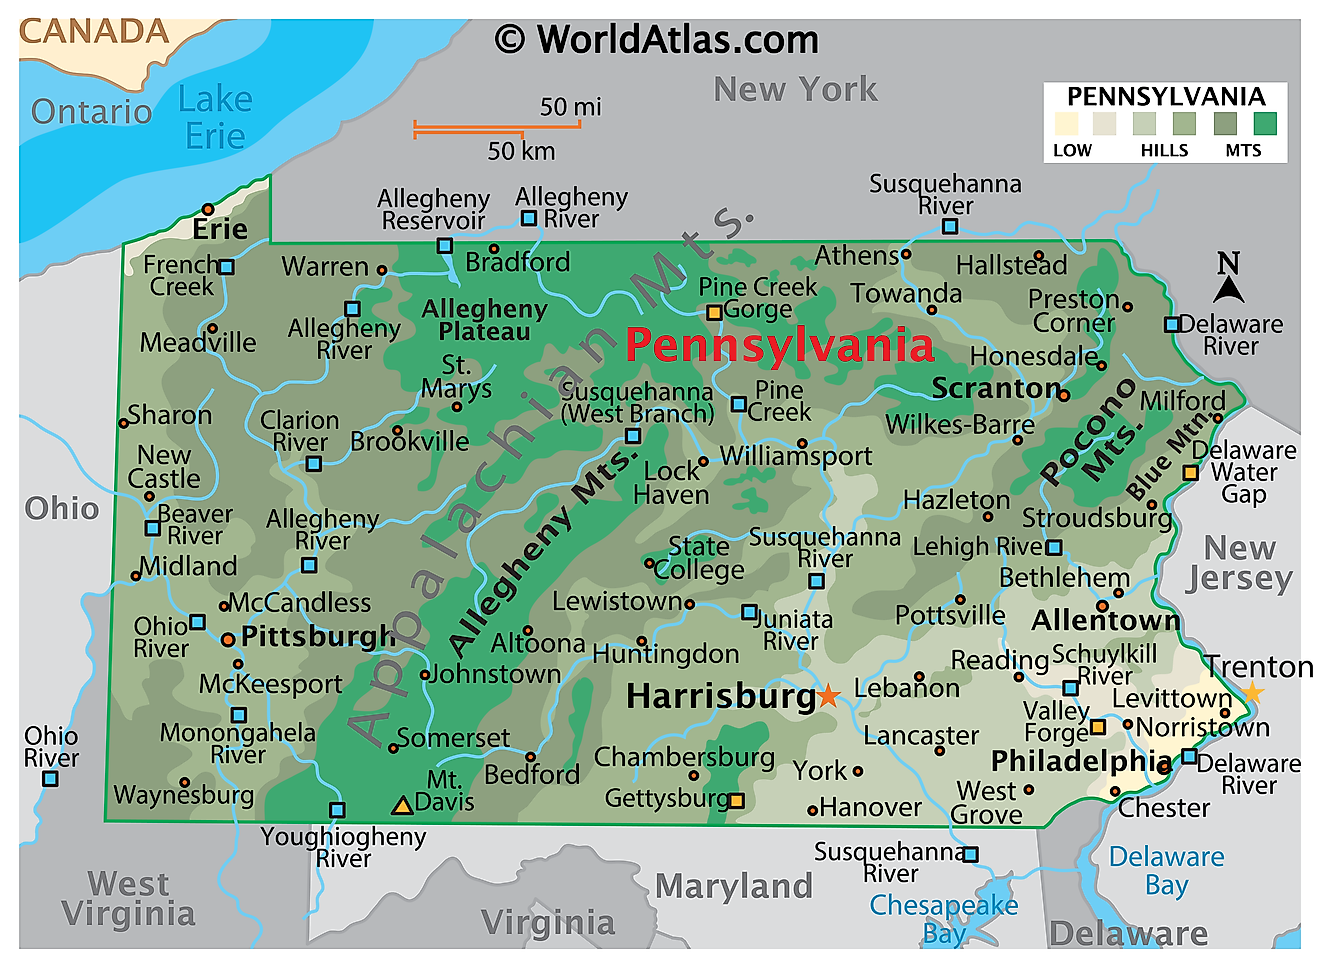 pennsylvania-maps-facts-world-atlas